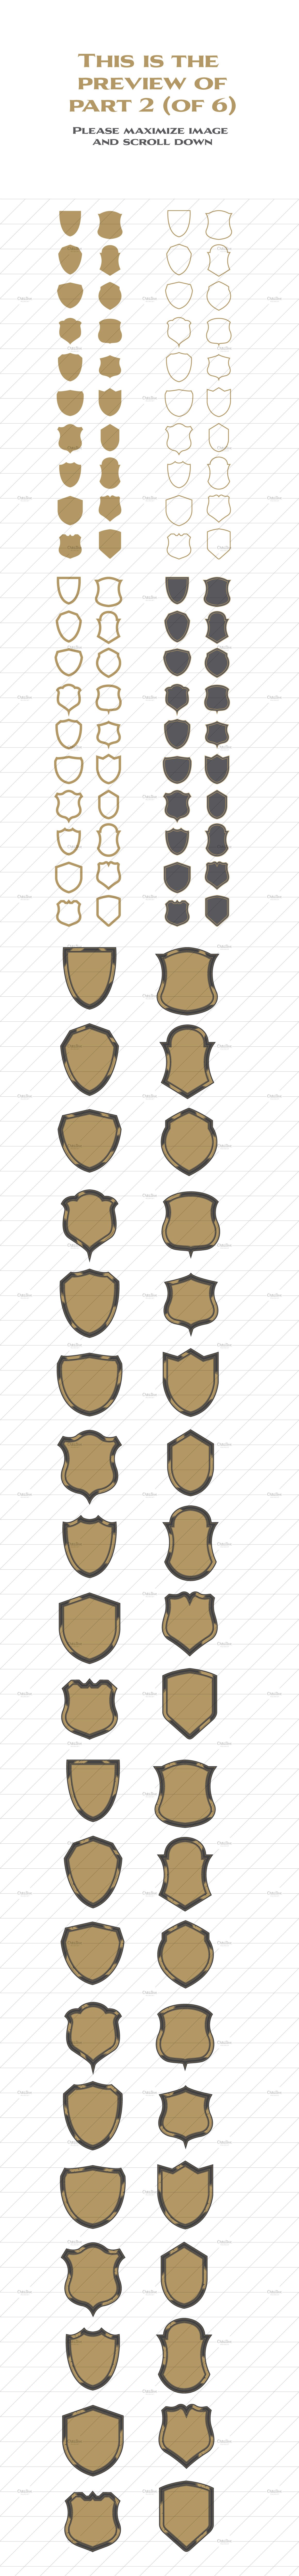 1080 shields shapes vector set base shapes preview part 2 560